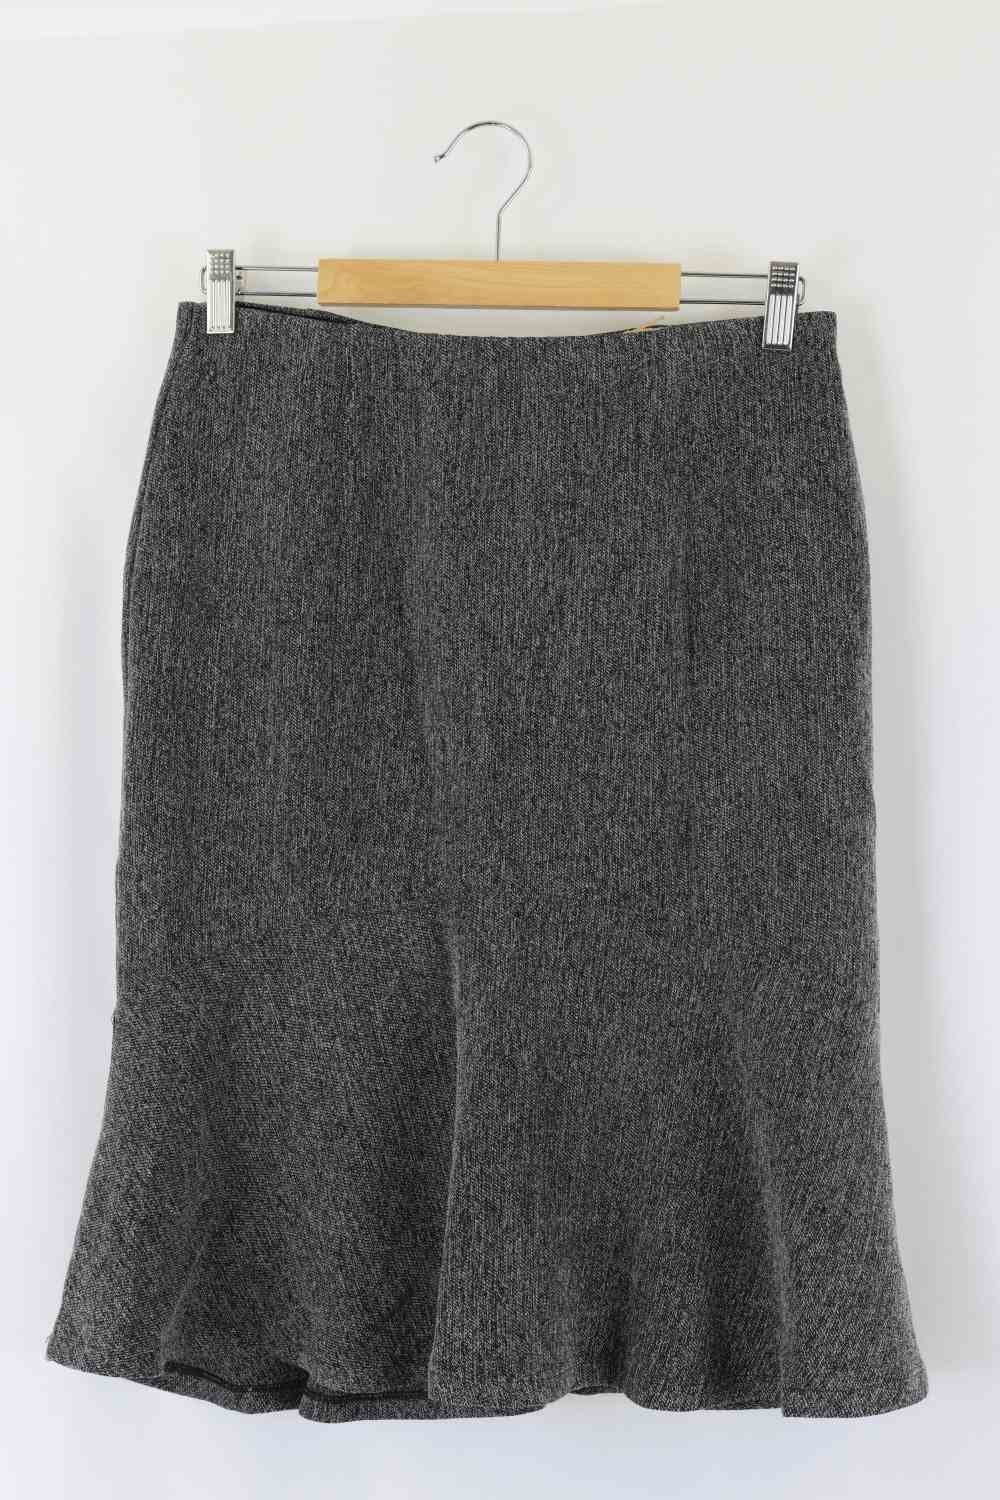 Jacqui E Charcoal Skirt 10